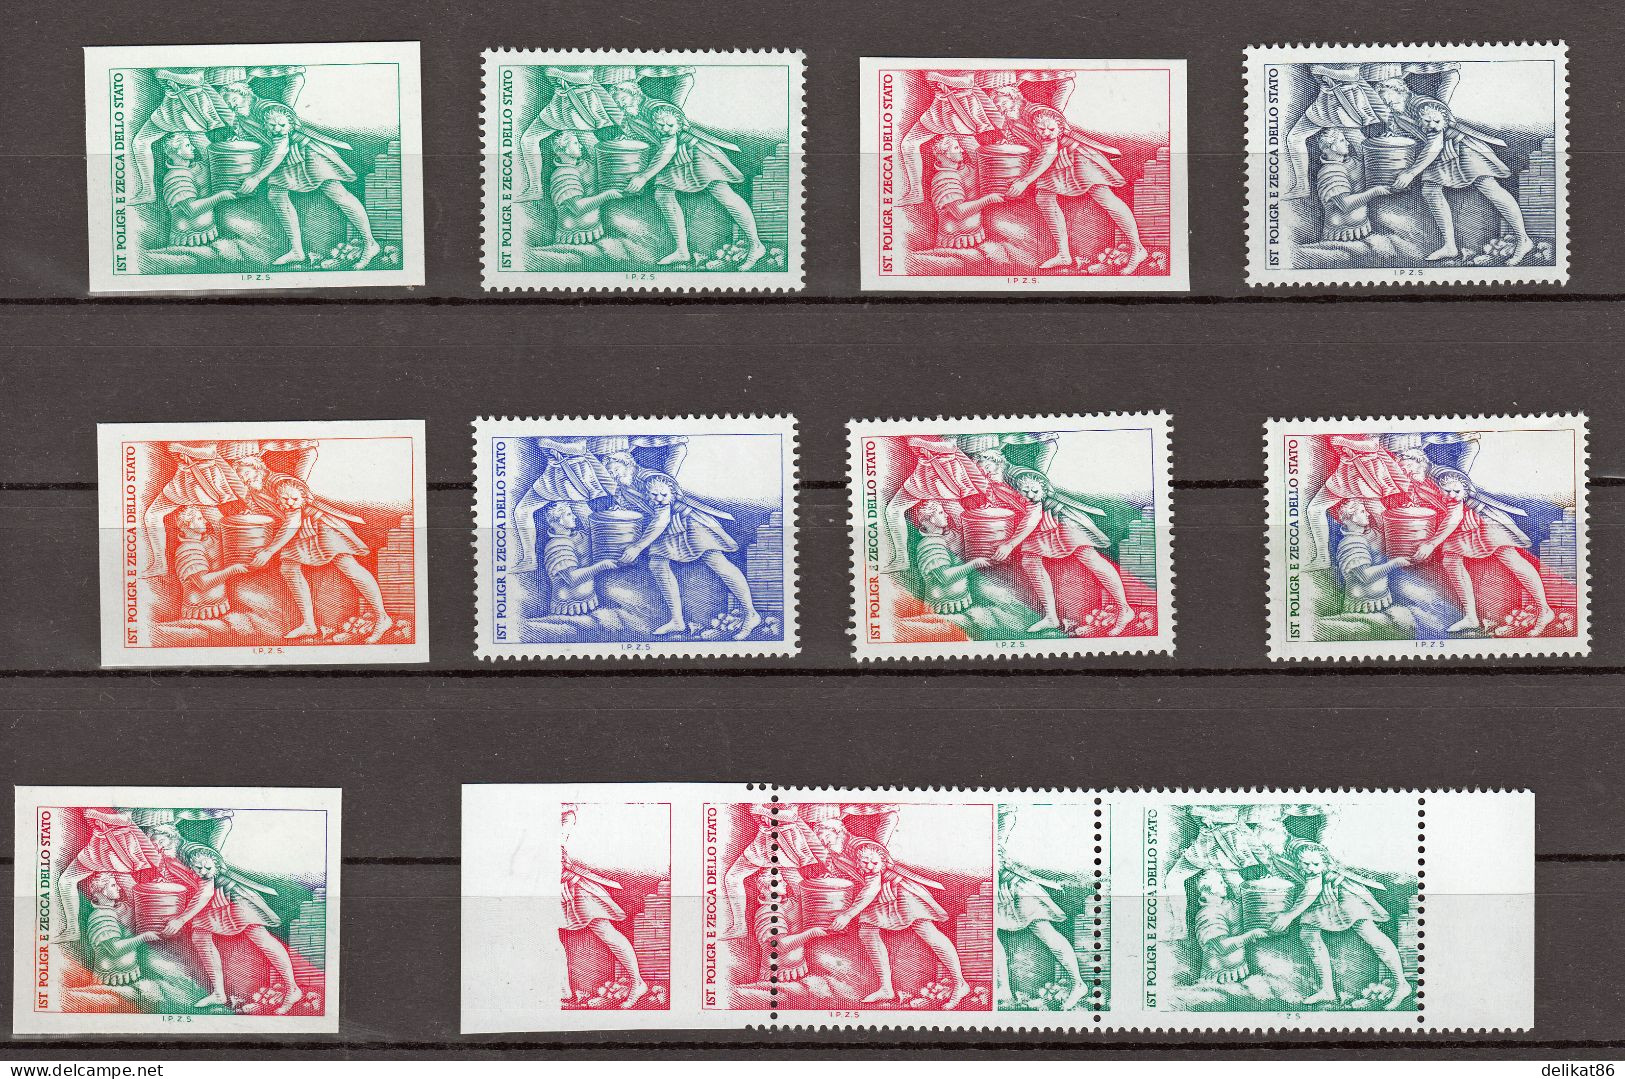 Probedruck Test Stamp Specimen Prove Istituto Poligrafico Dello Stato 2003 - 2001-10: Neufs